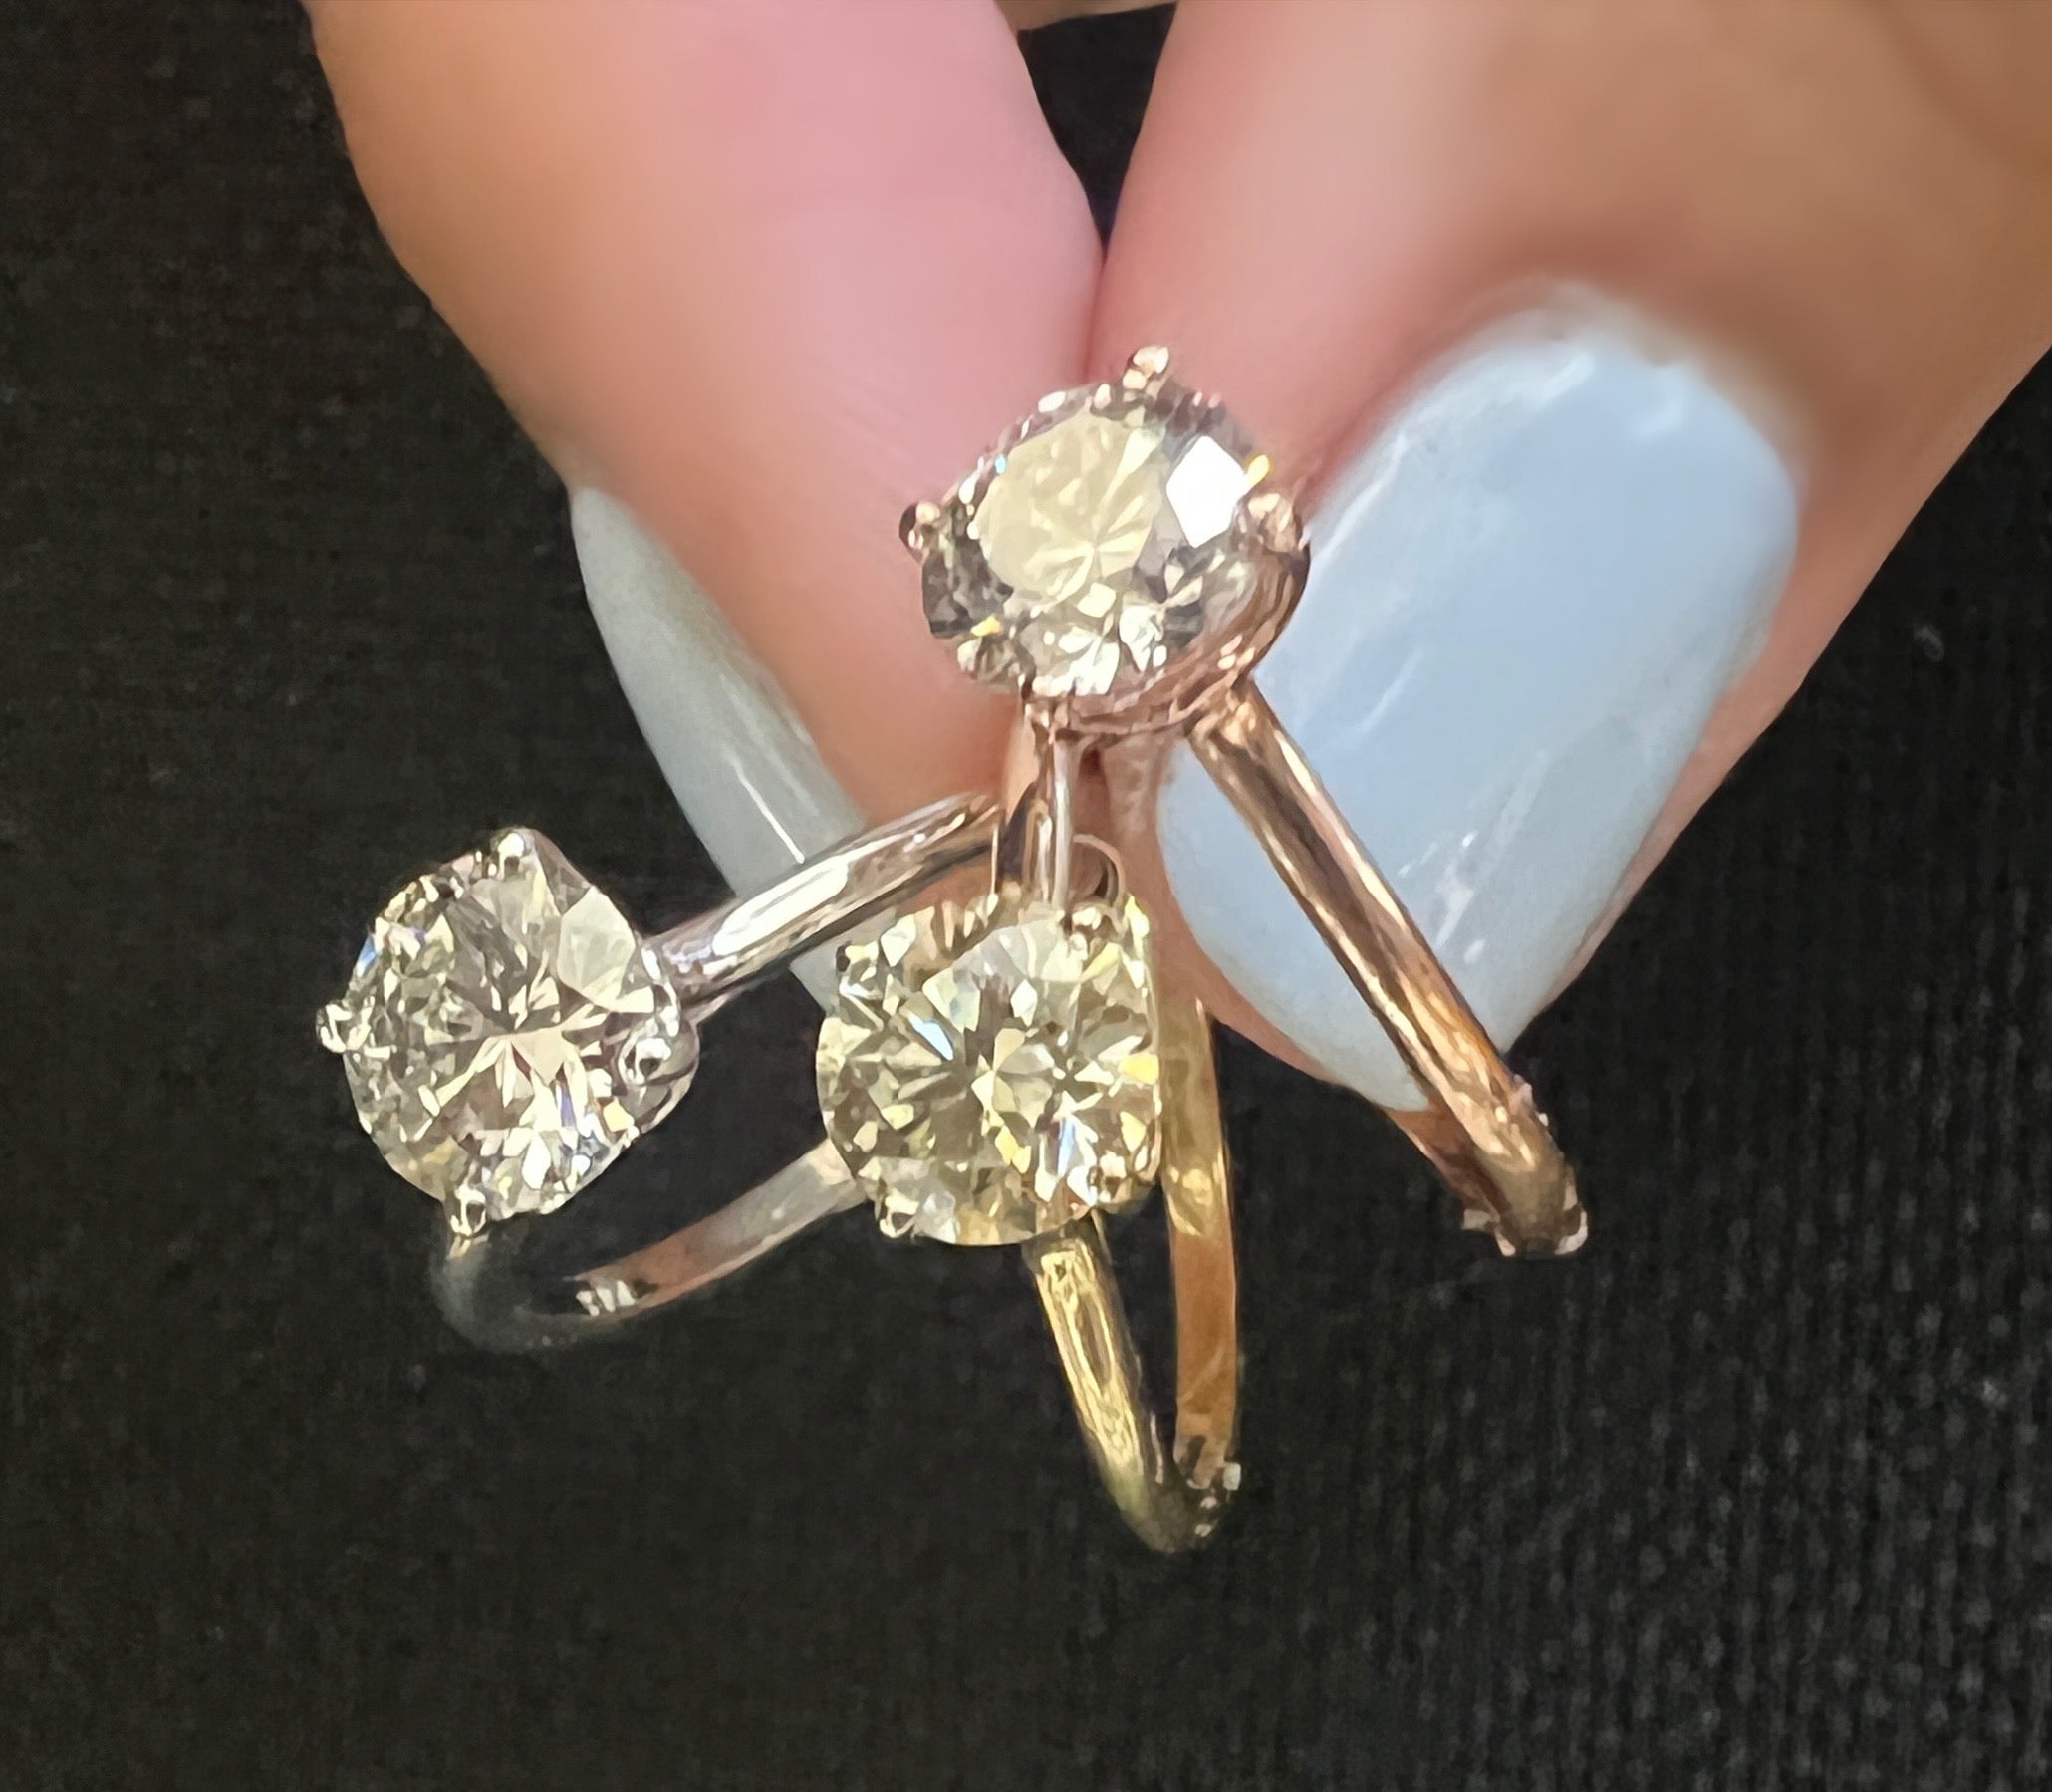 1 carat Lab Grown Diamond Solitaire Ring